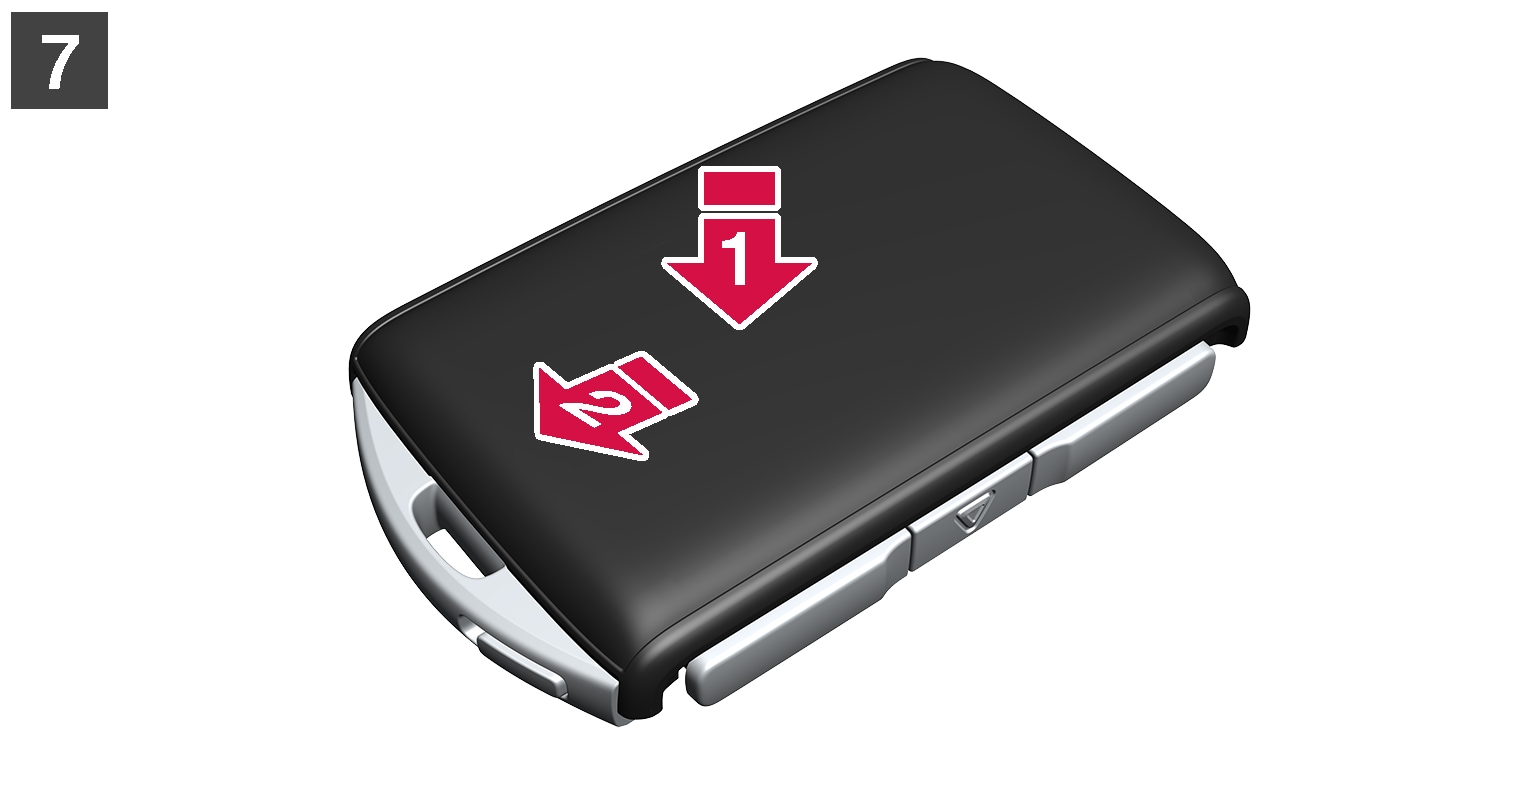 16w17 - SPA - Change battery in remote key - No 7